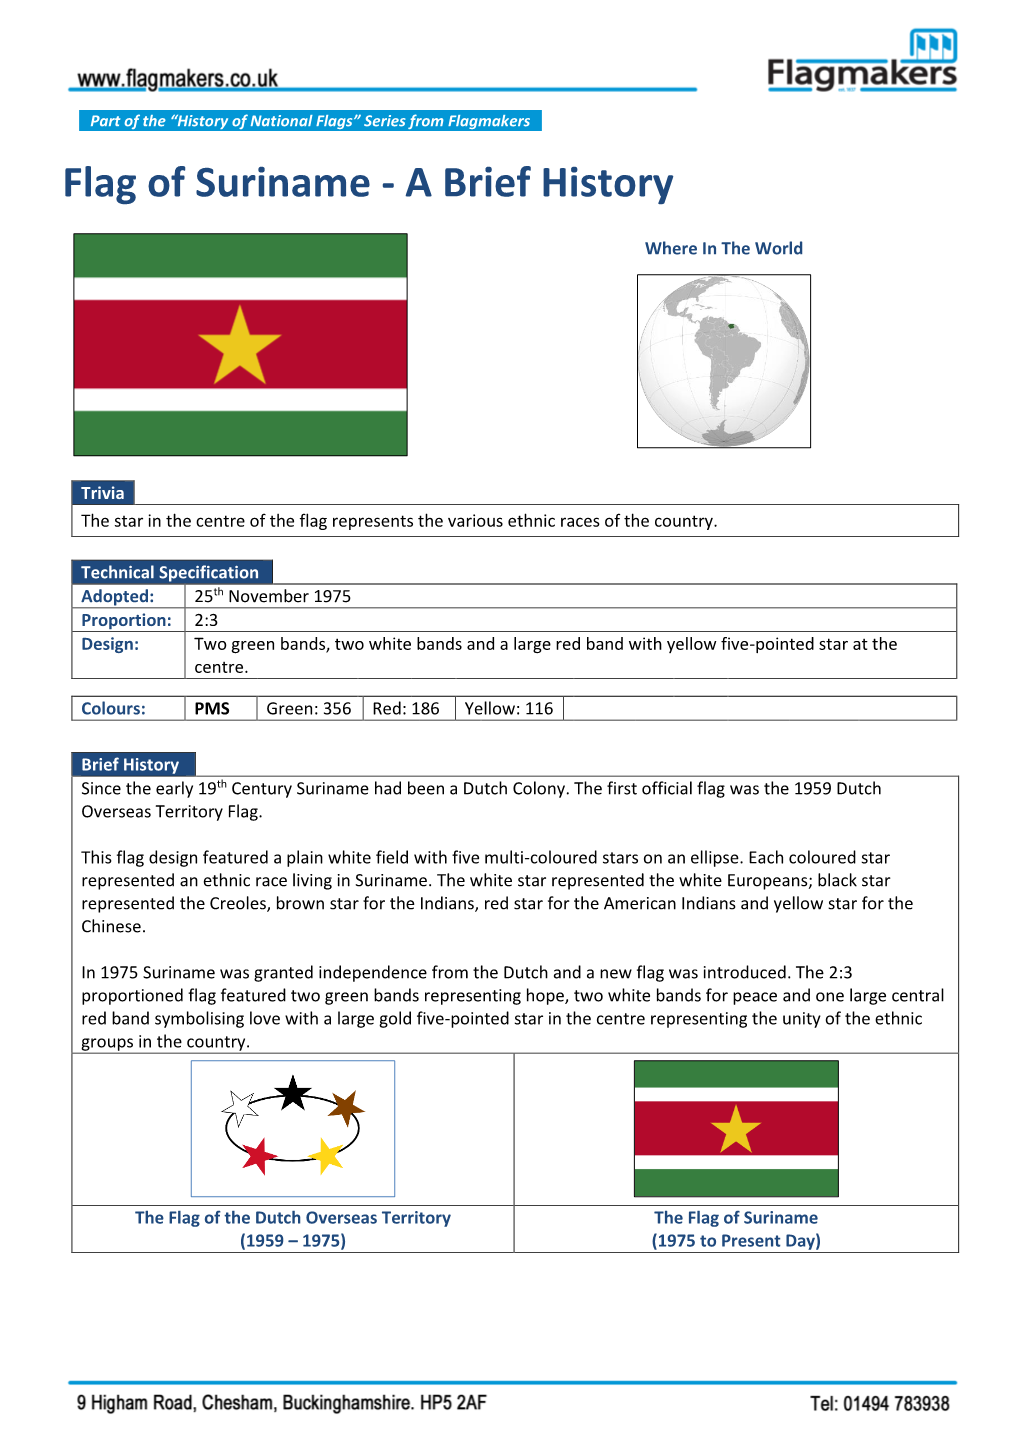 Flag of Suriname - a Brief History